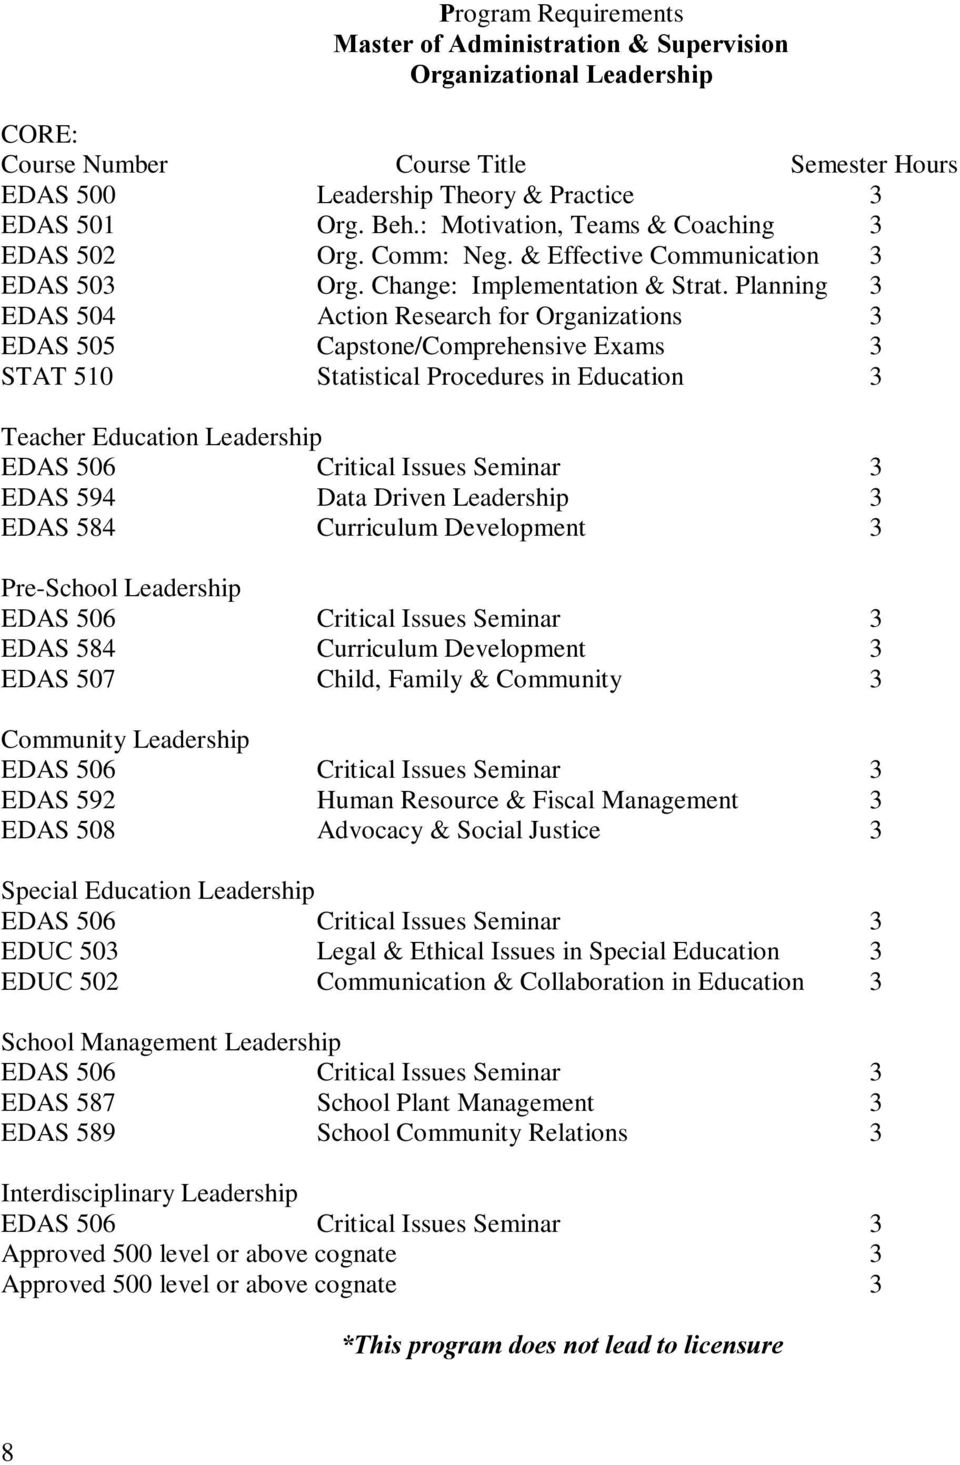 Planning 3 EDAS 504 Action Research for Organizations 3 EDAS 505 Capstone/Comprehensive Exams 3 STAT 510 Statistical Procedures in Education 3 Teacher Education Leadership EDAS 506 Critical Issues